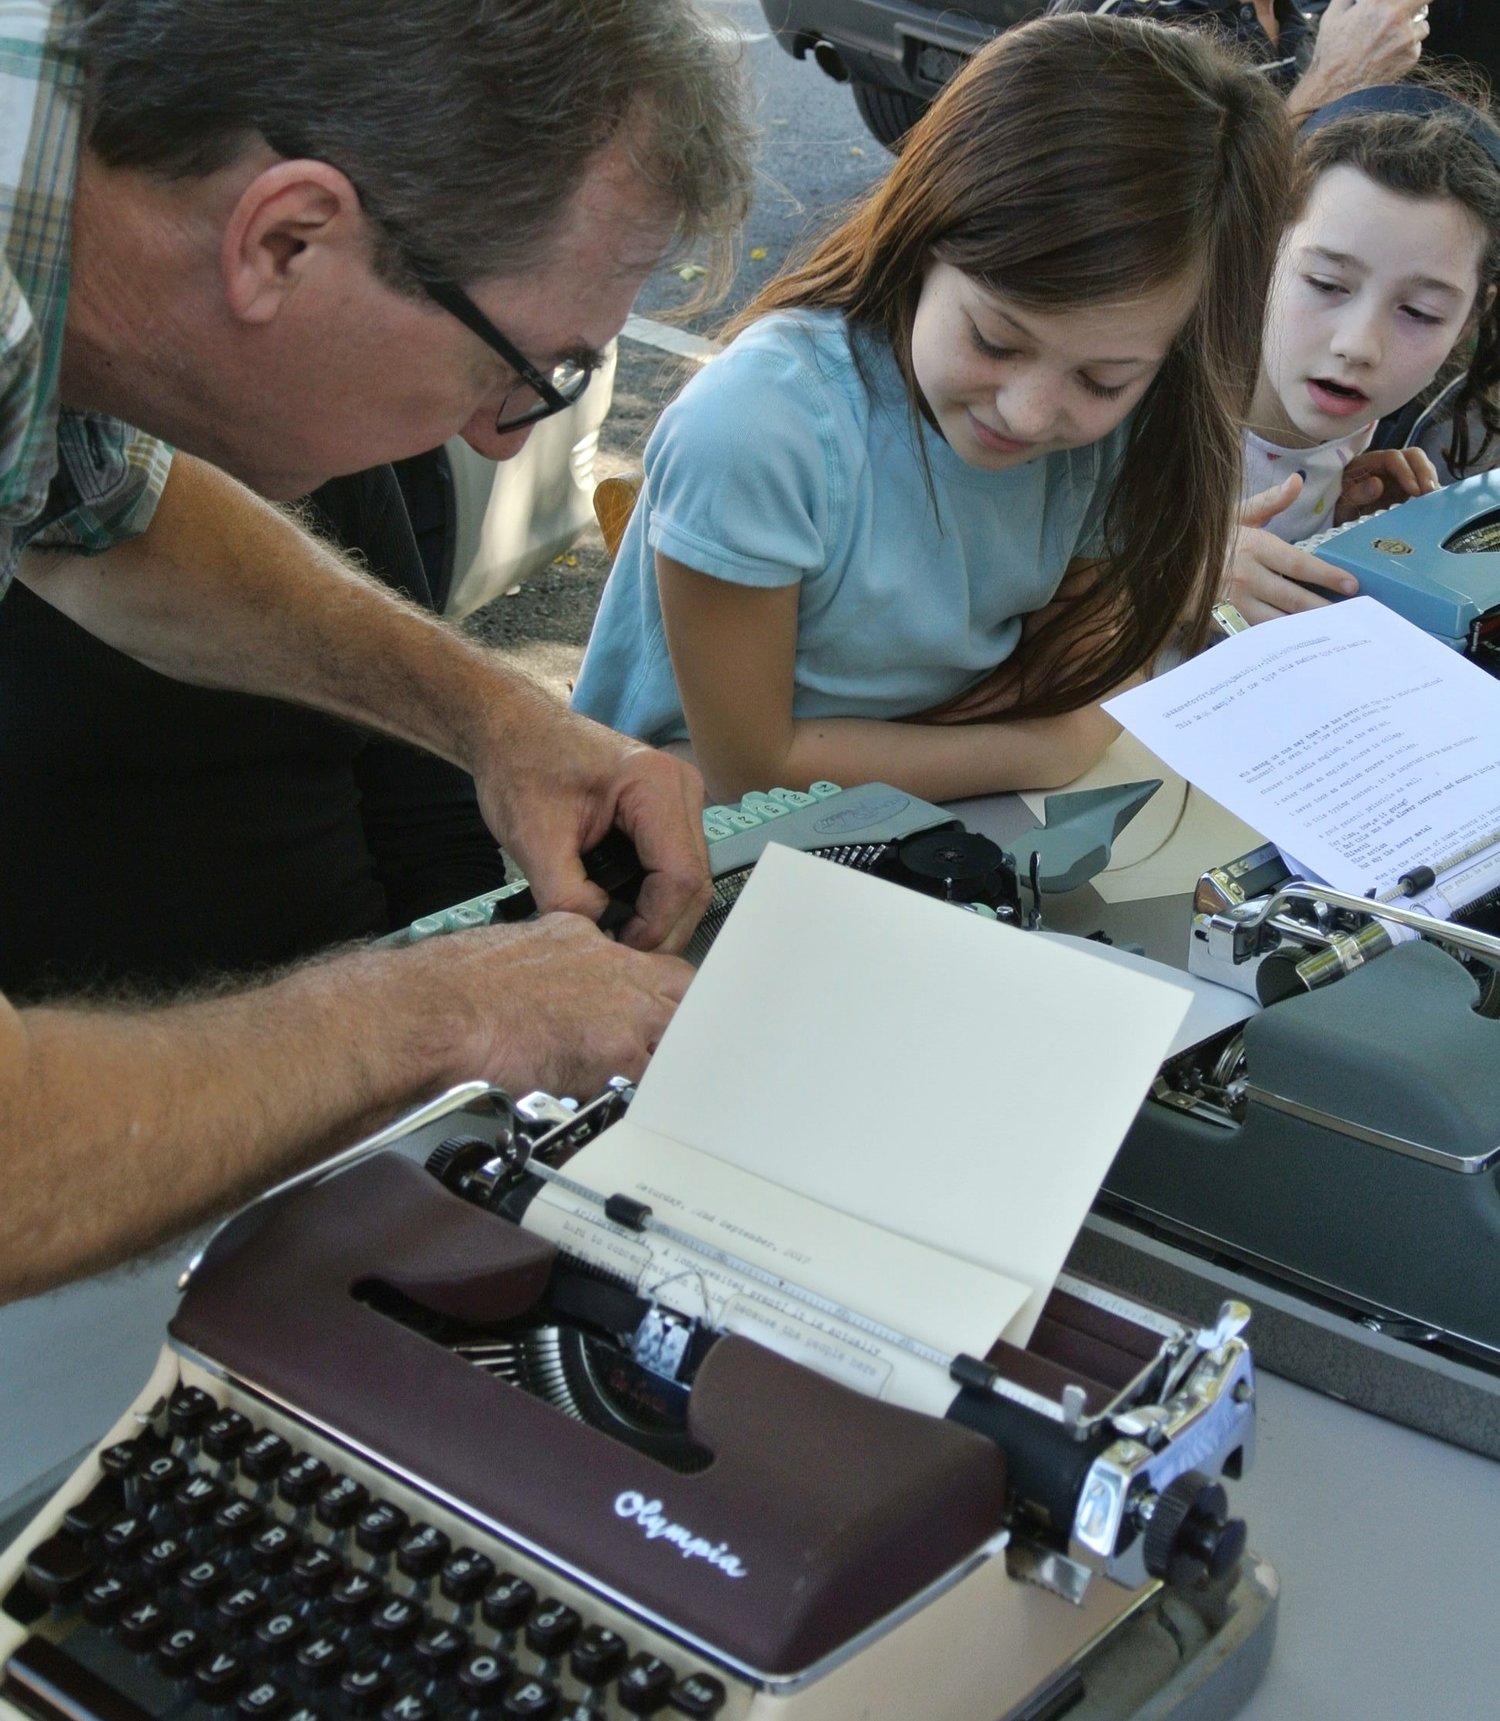 Typewriter The Writing Machine East Germany, others, typewriter